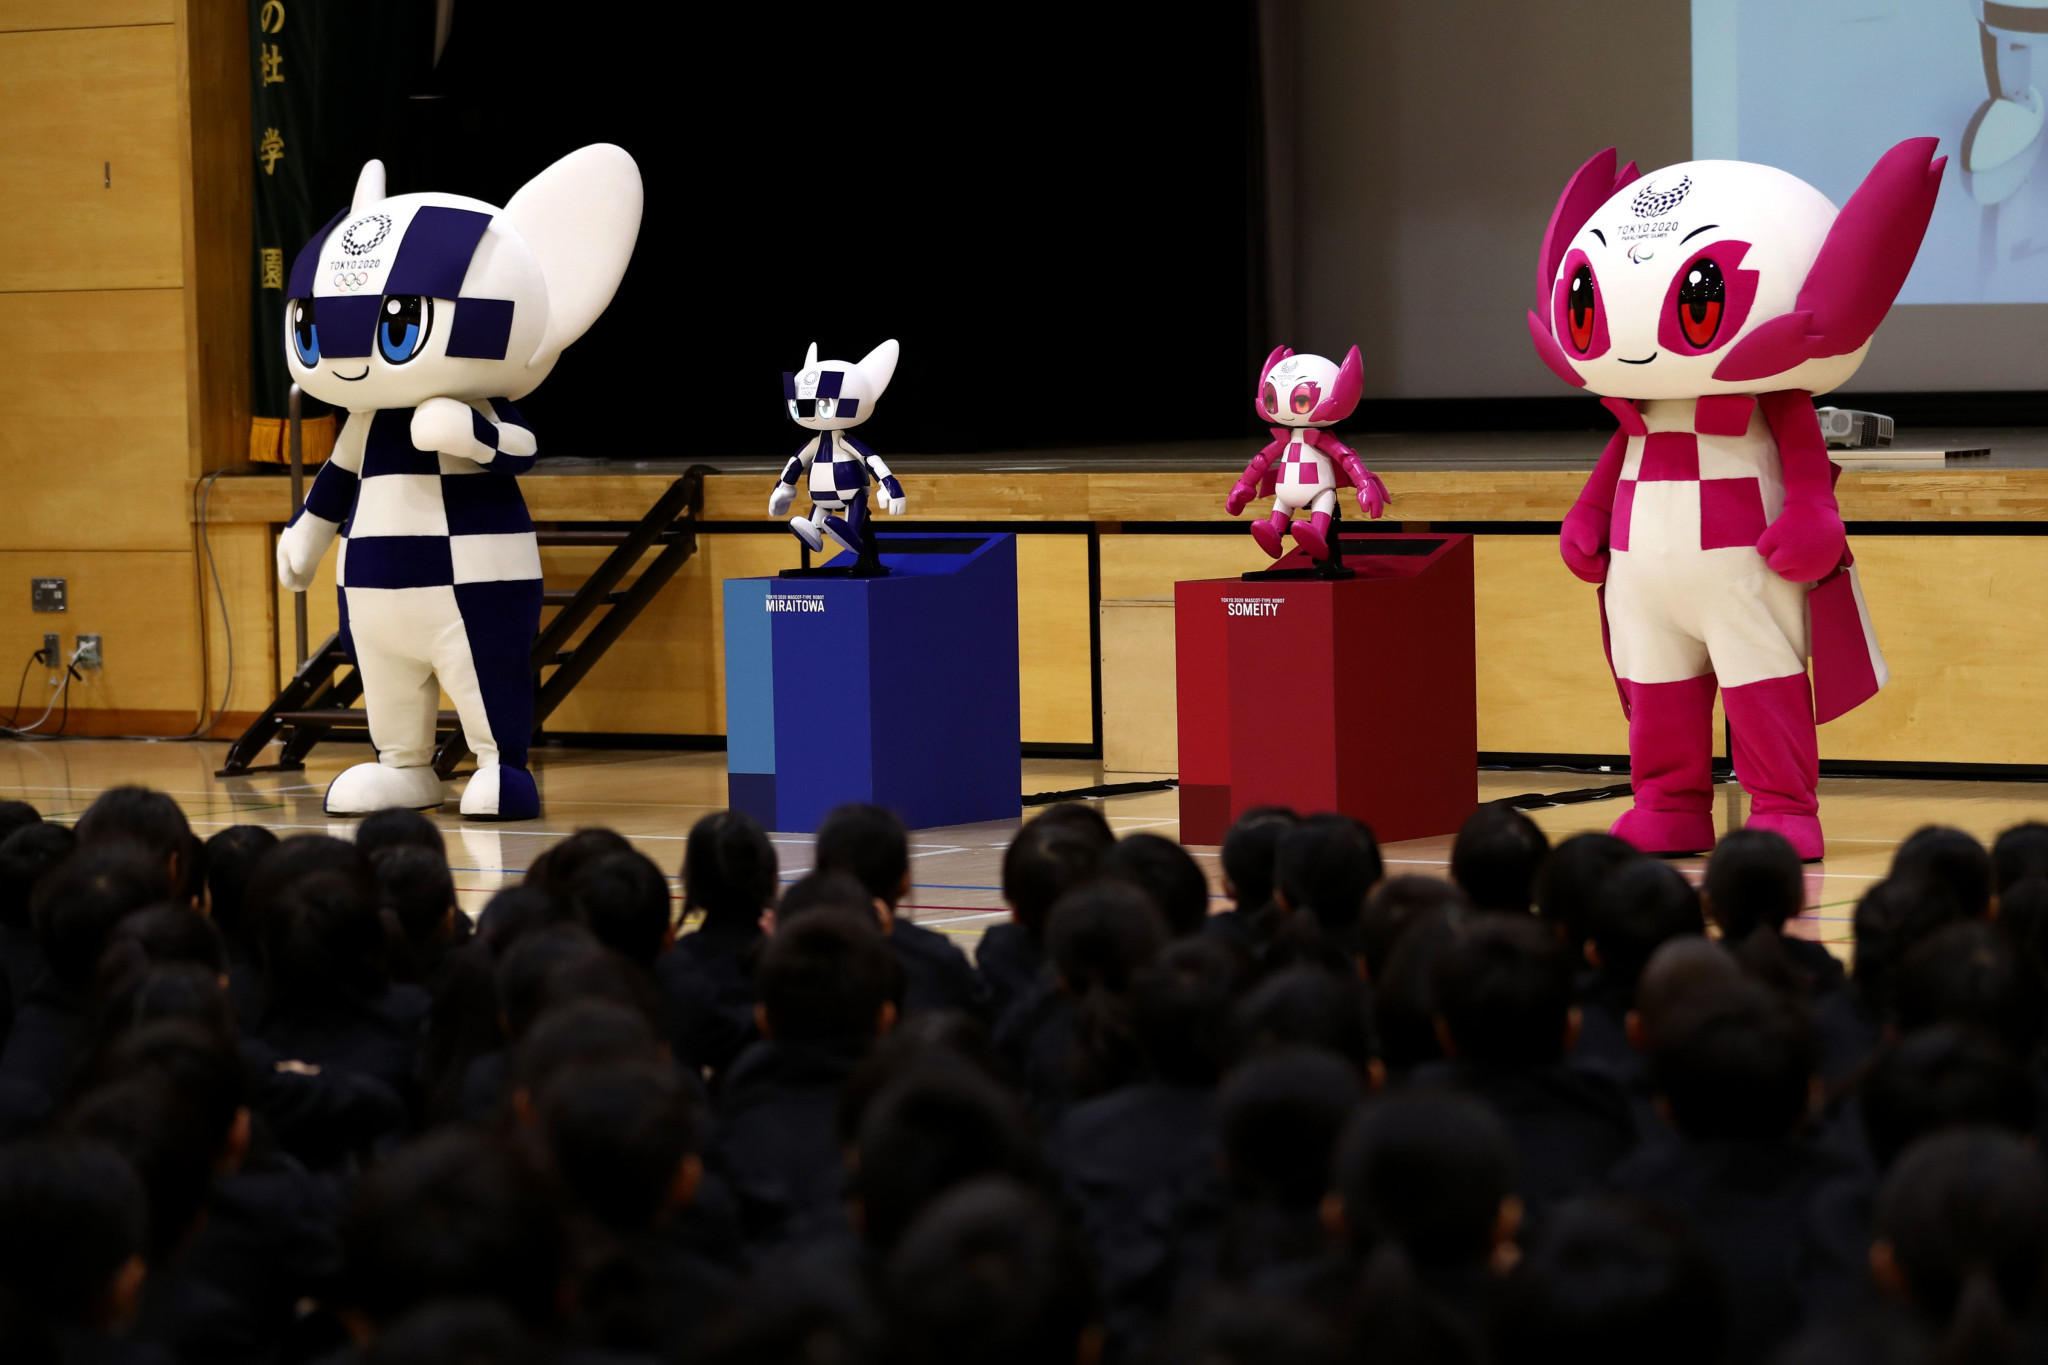 Tokyo 2020 demonstrate mascot robots with school pupils